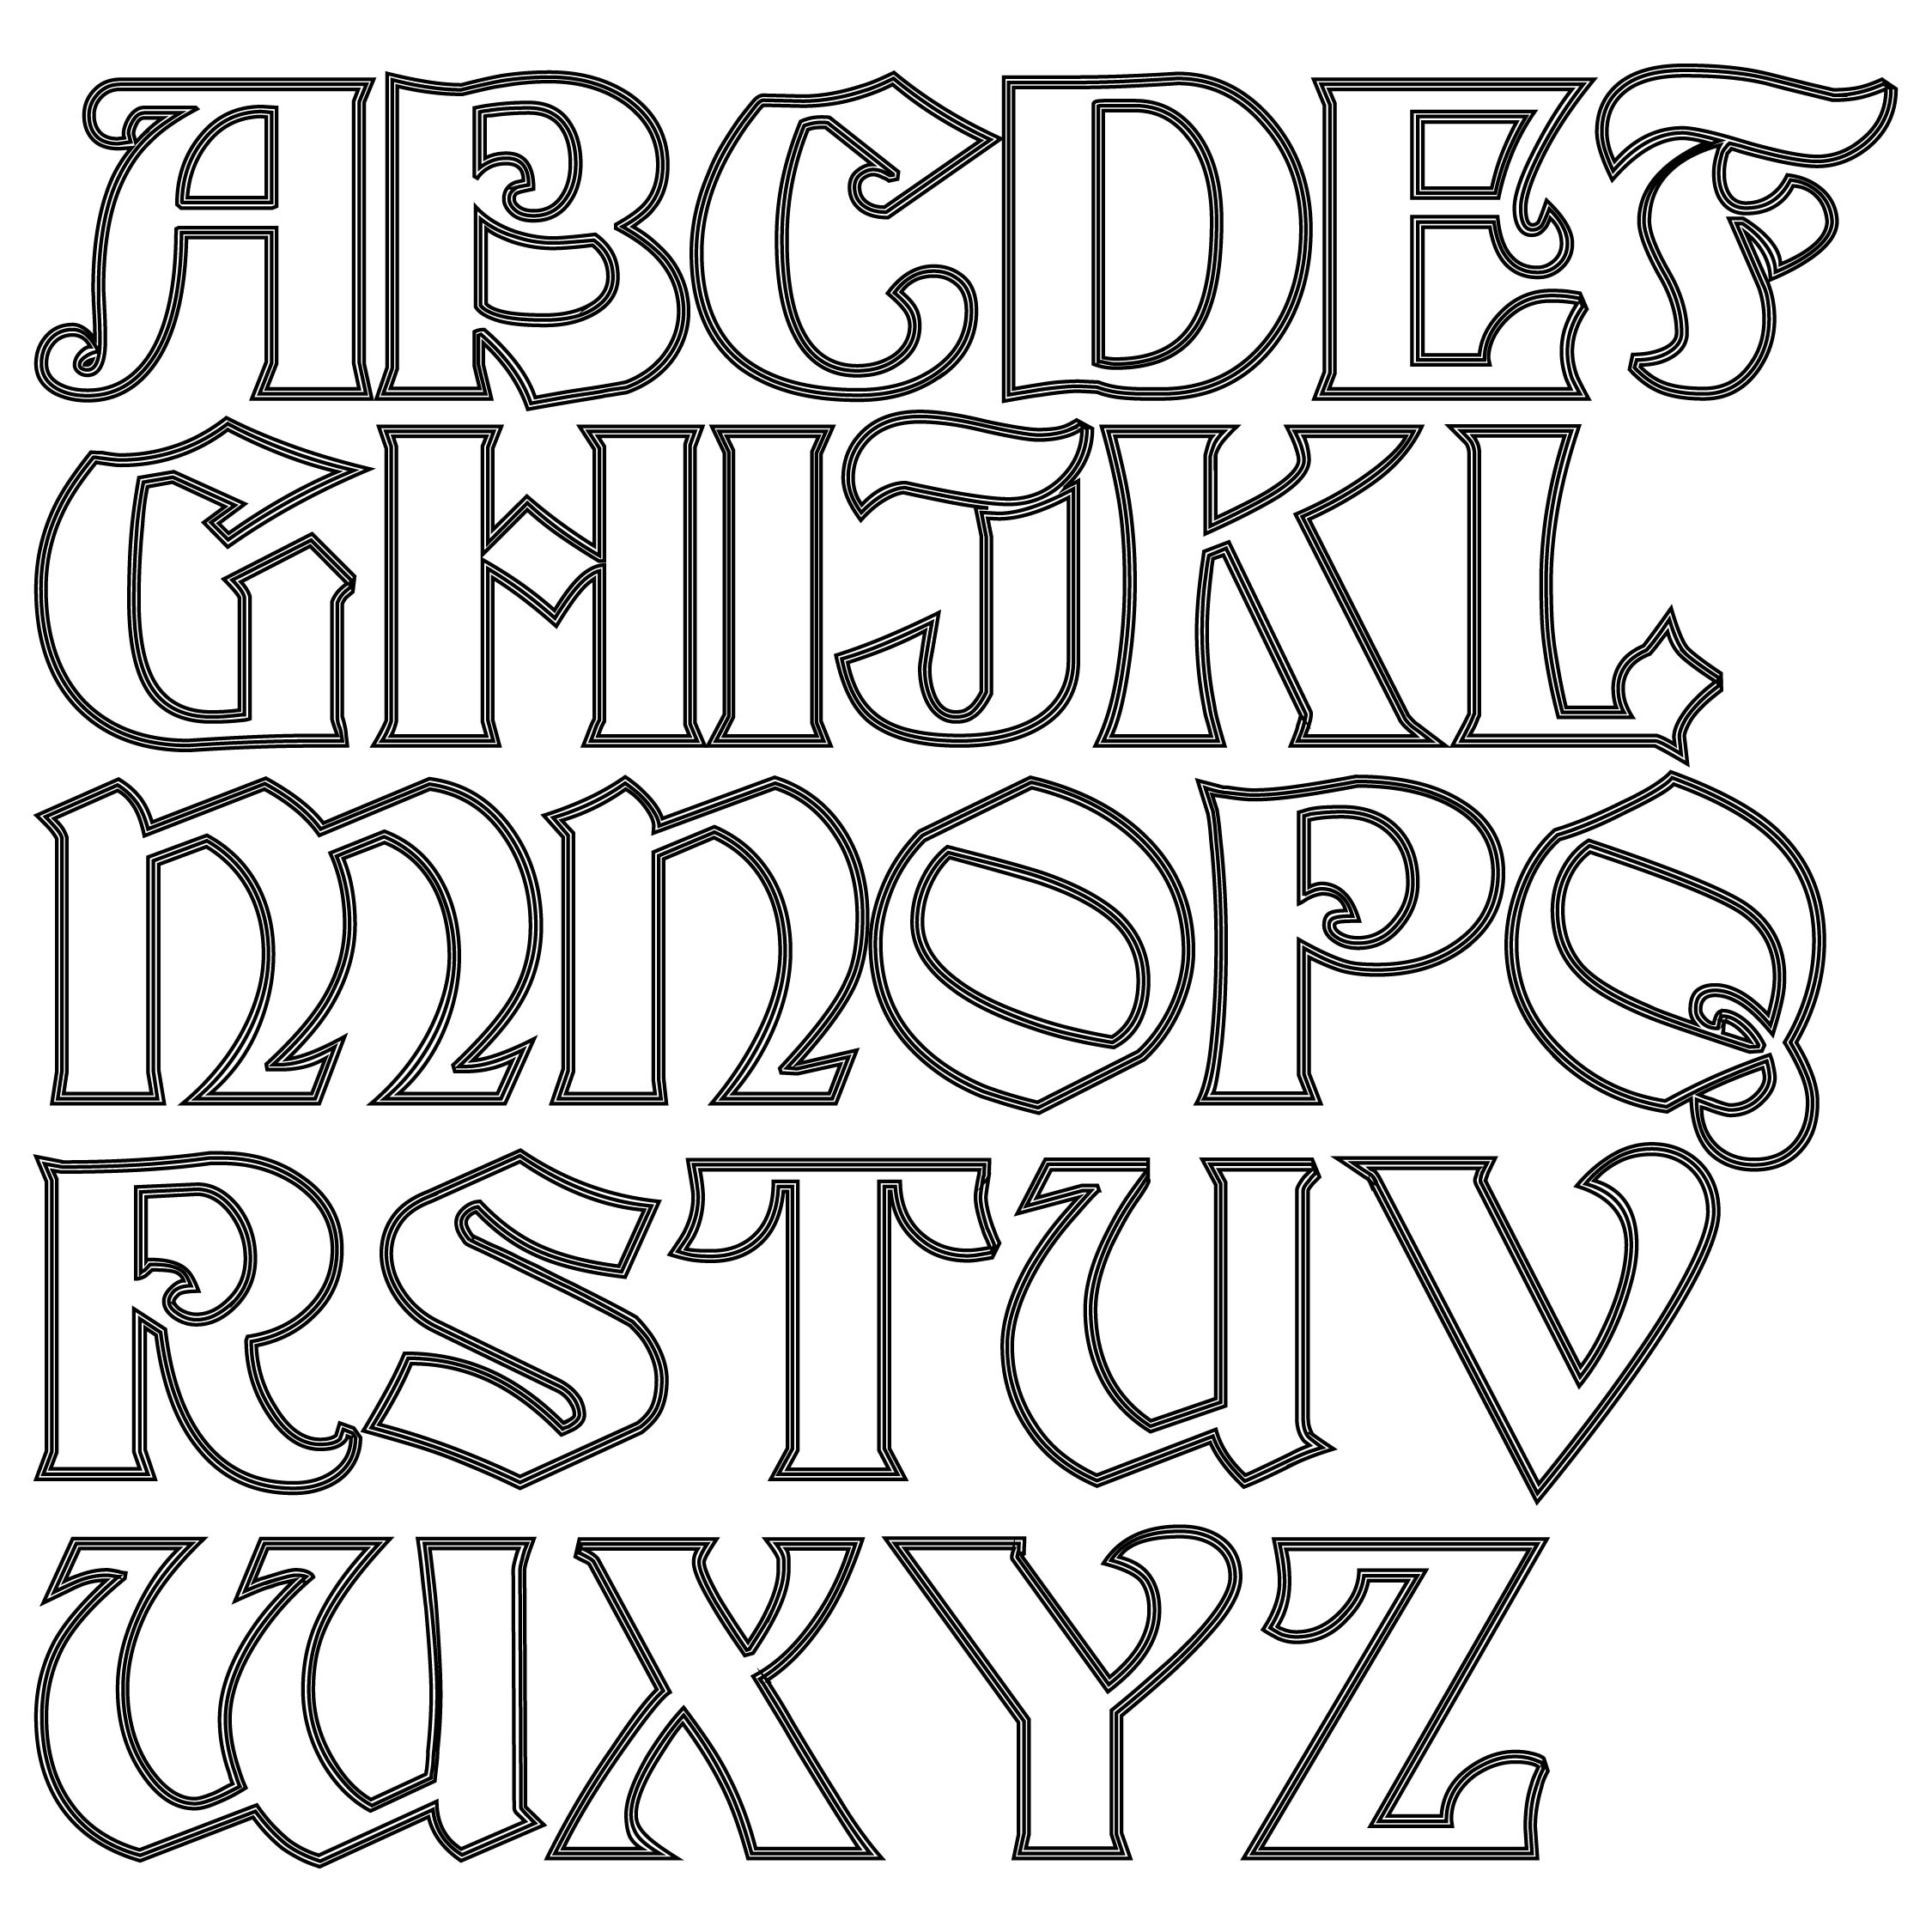 Printable Stencil Alphabet - Customize and Print